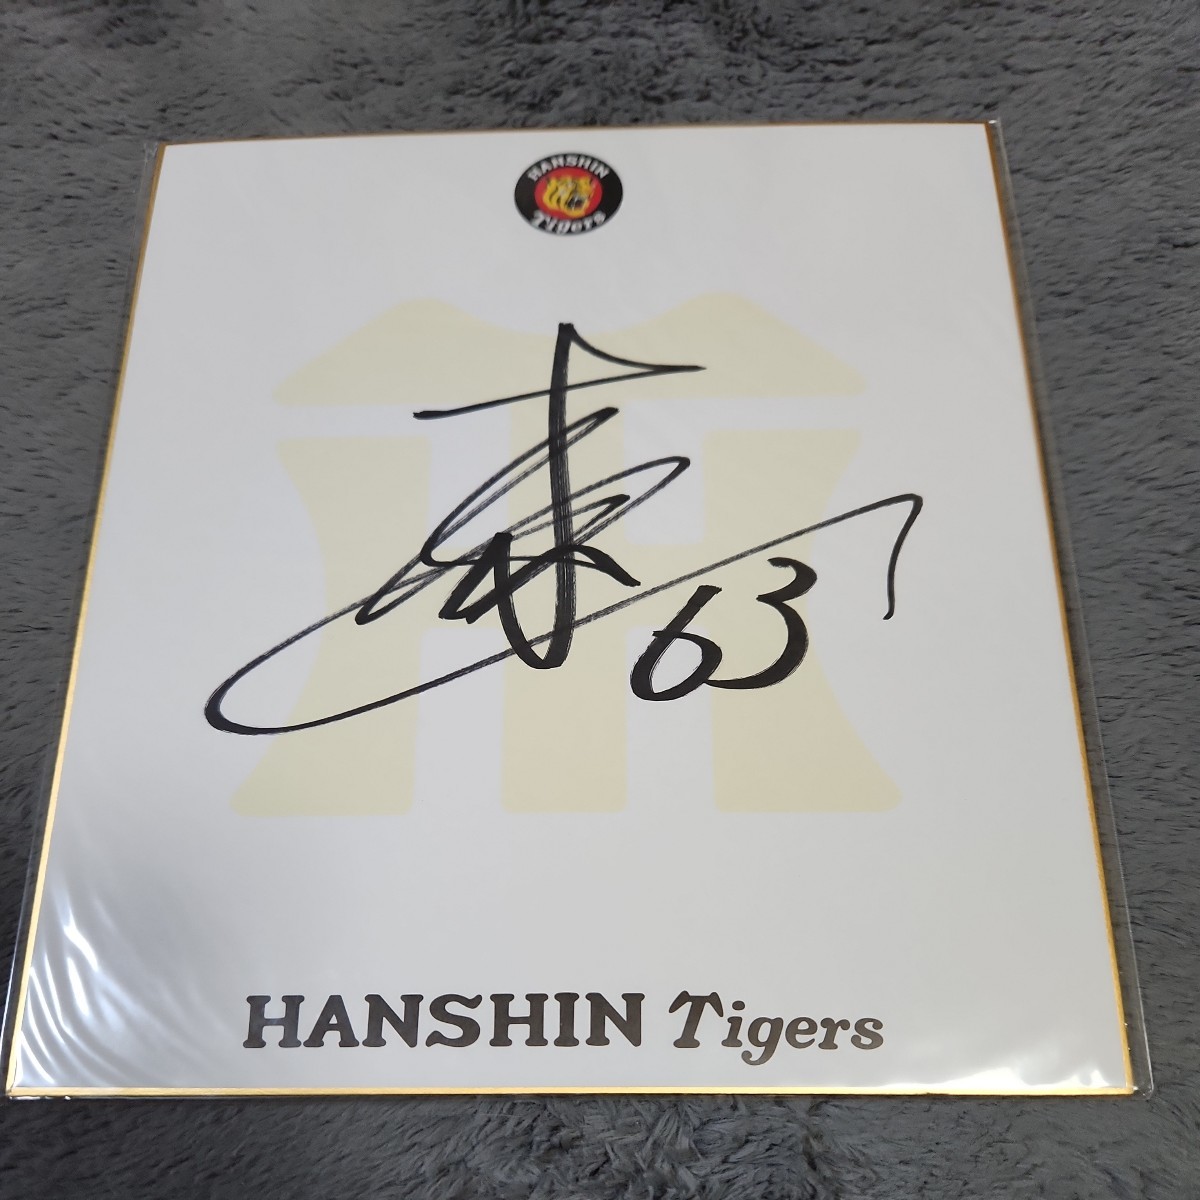 Hanshin Tigers Yutaro Itayama autographed by the team, baseball, Souvenir, Related Merchandise, sign